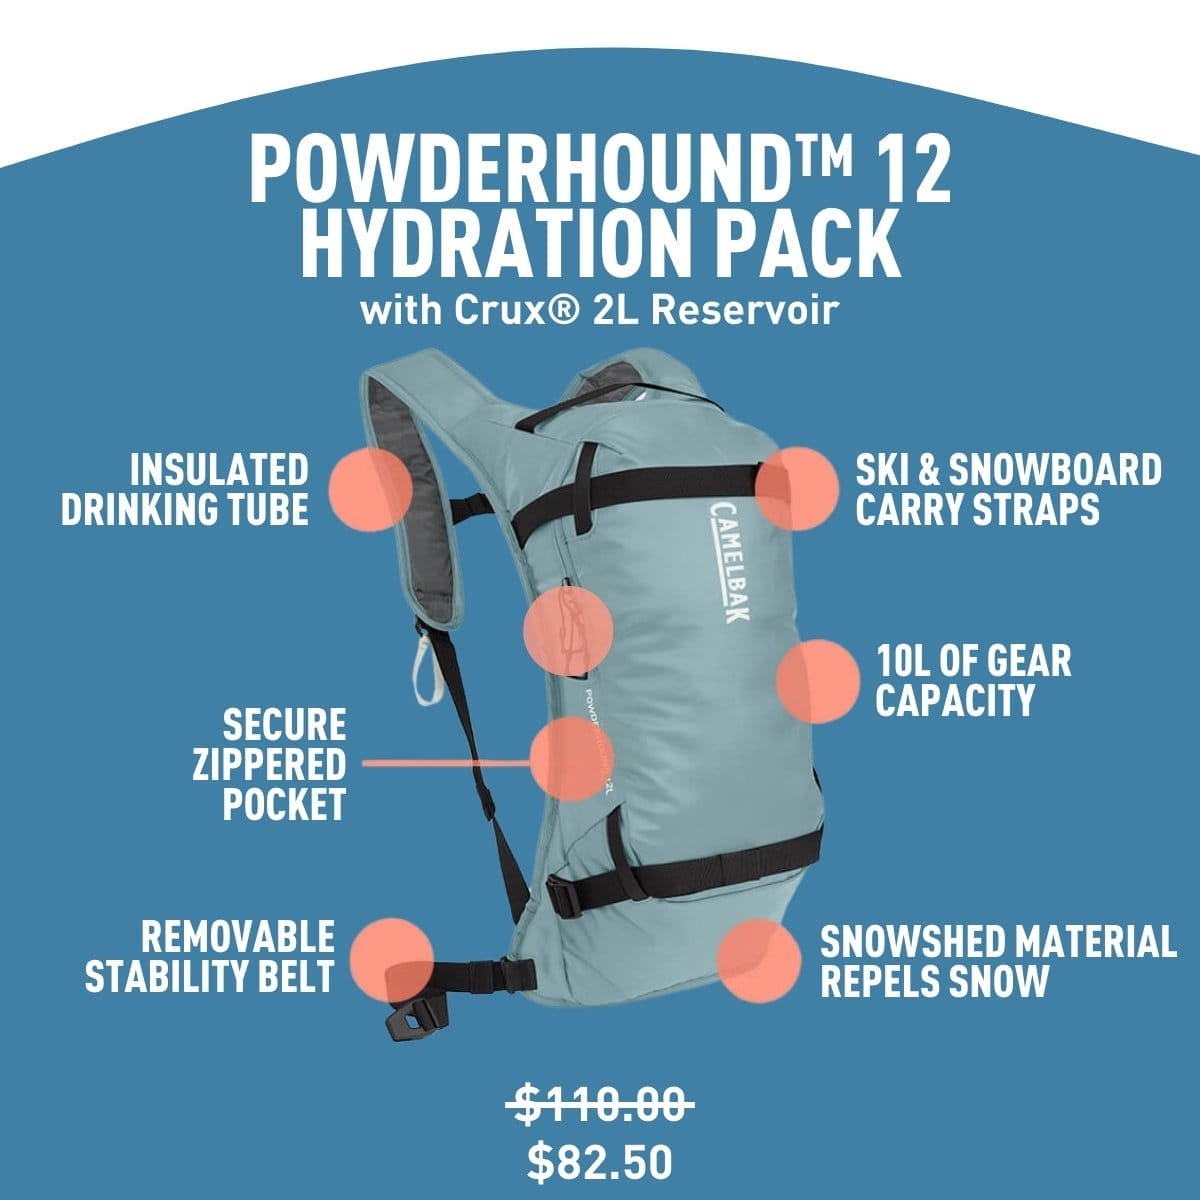 Powderhound ™ 12 Hydration Pack